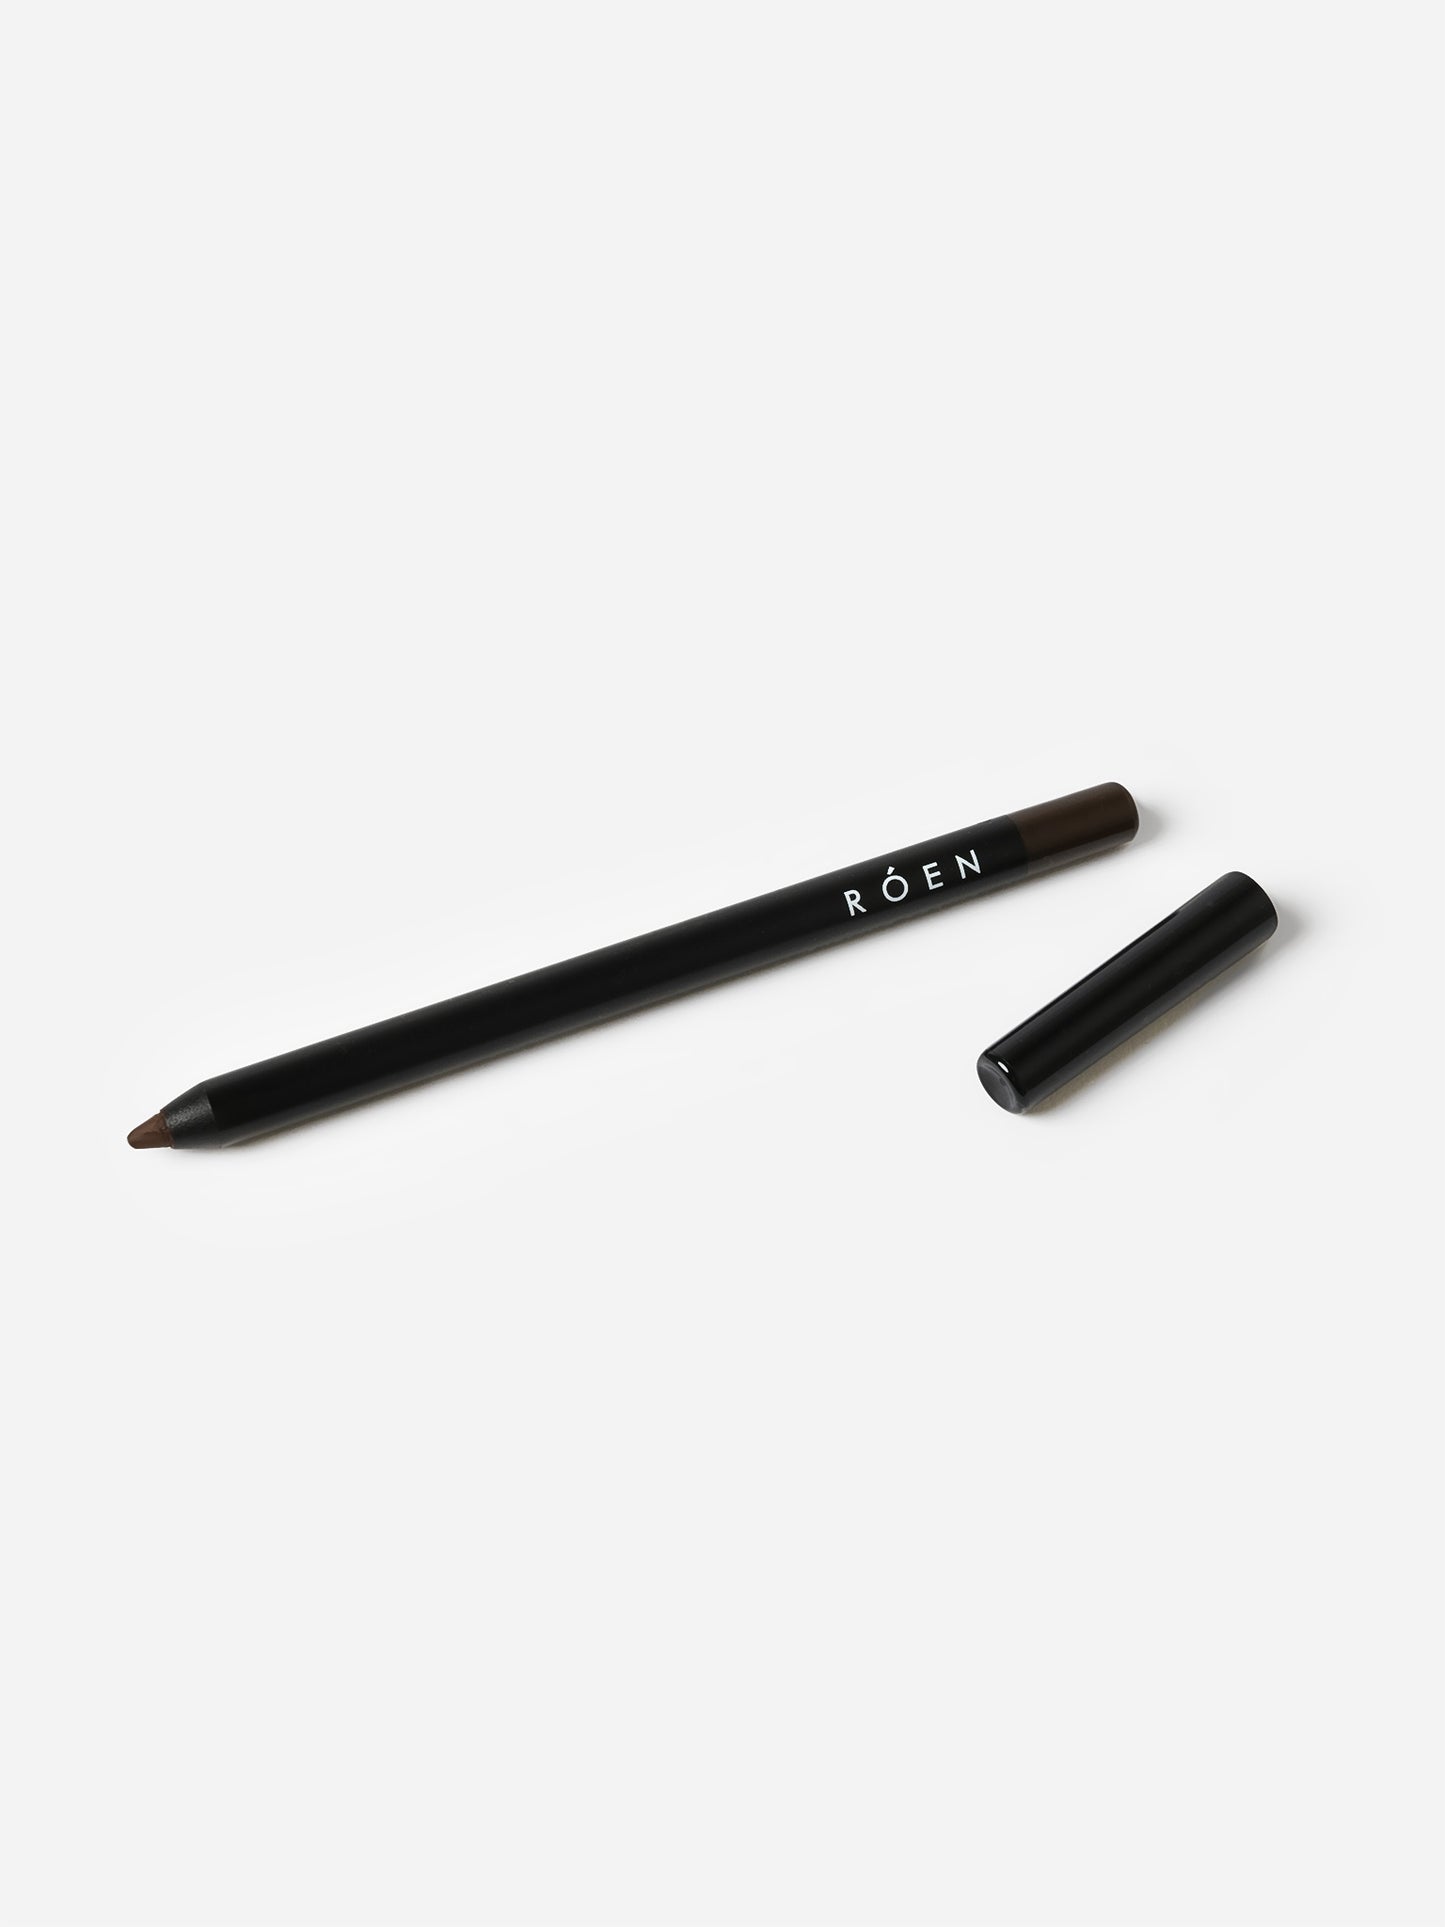 Roen Beauty Eyeline Define Eyeliner Pencil